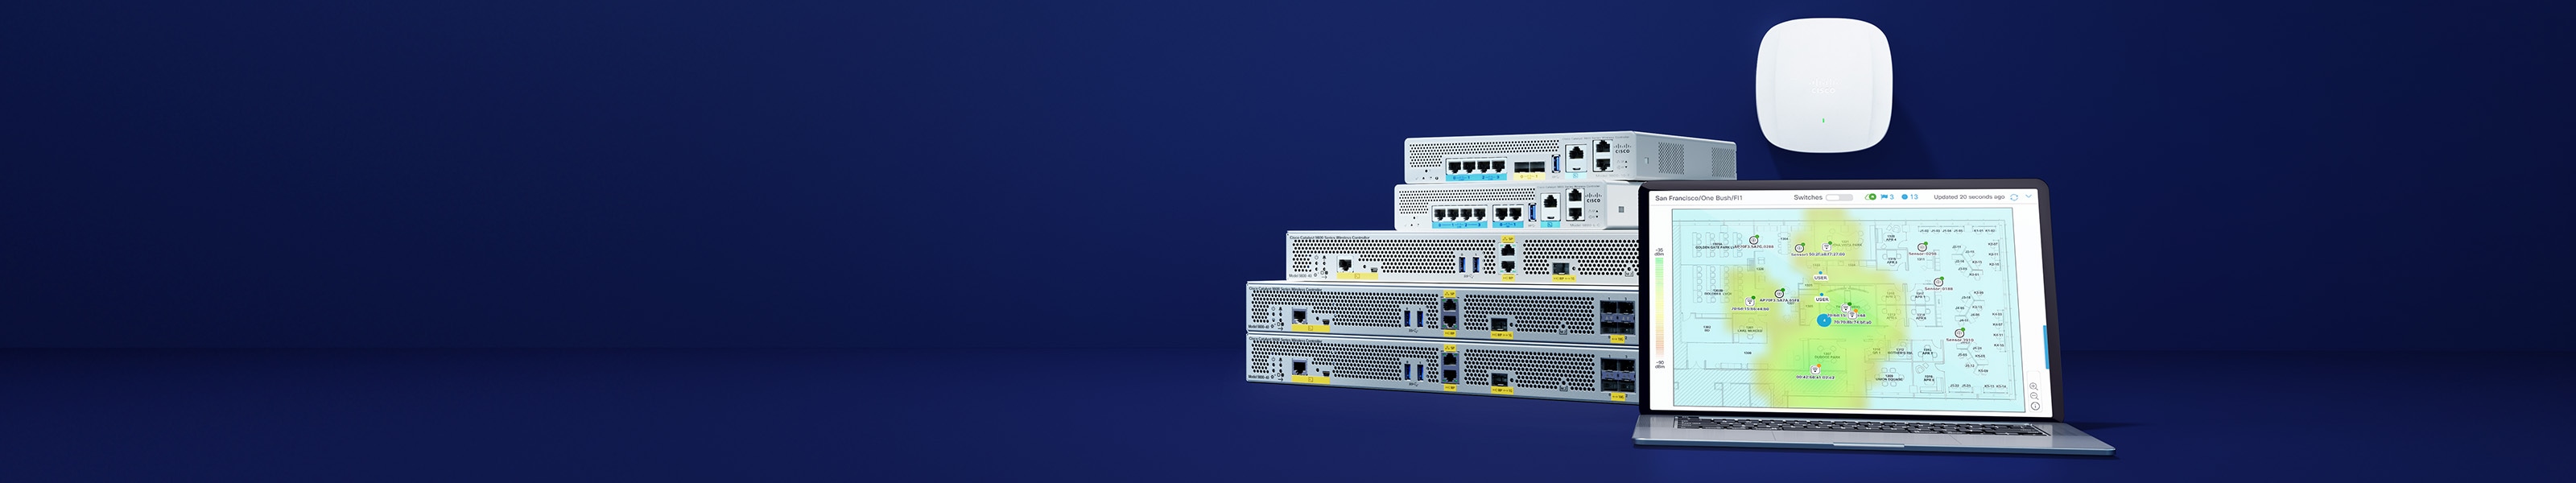 Cisco Catalyst 9800 wireless lan controllers, Cisco Catalyst access point, with Cisco Catalyst Center 3D analyzer image